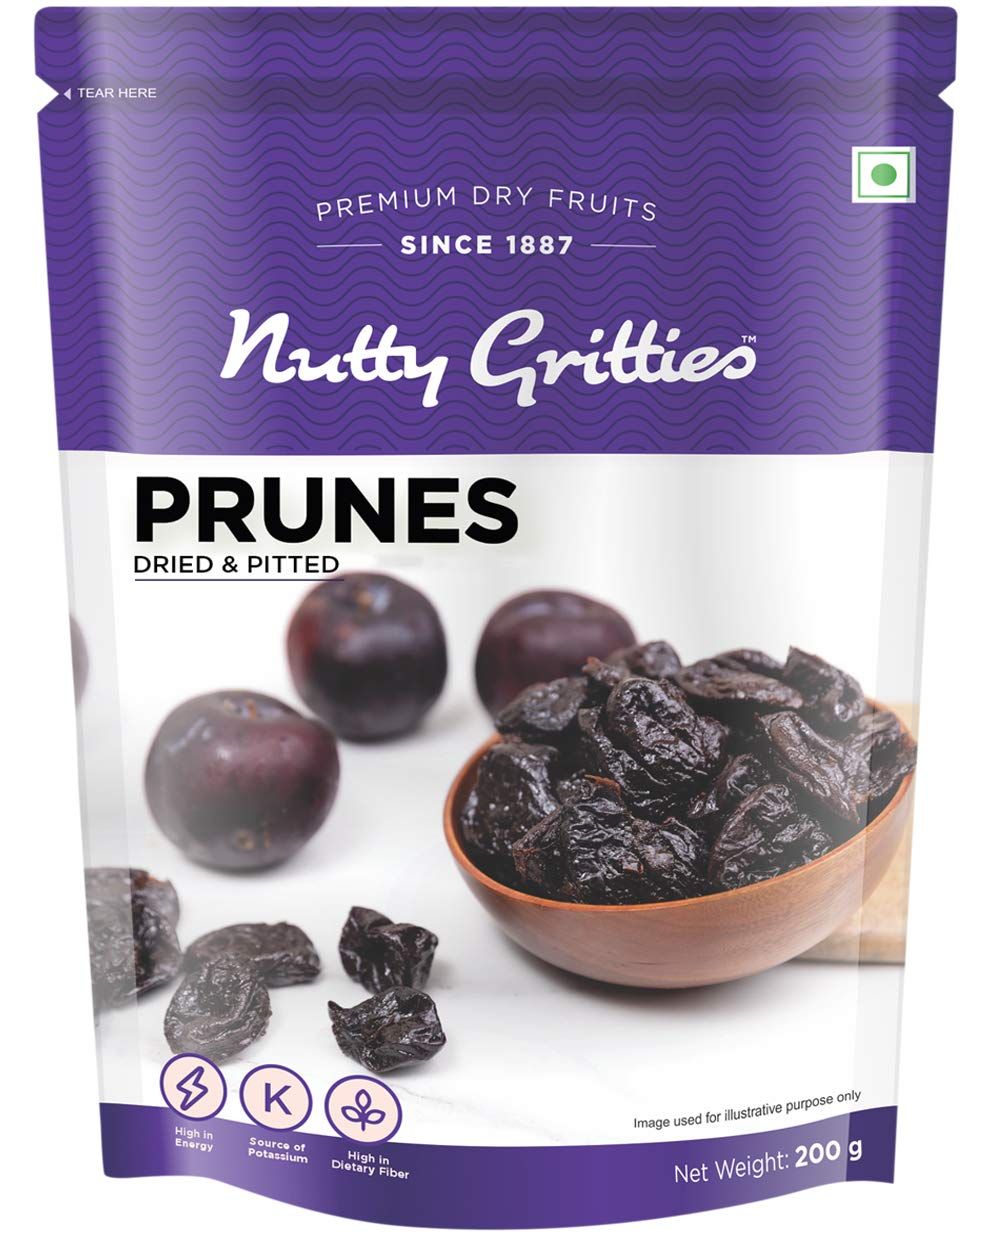 Nutty Gritties Prunes Image